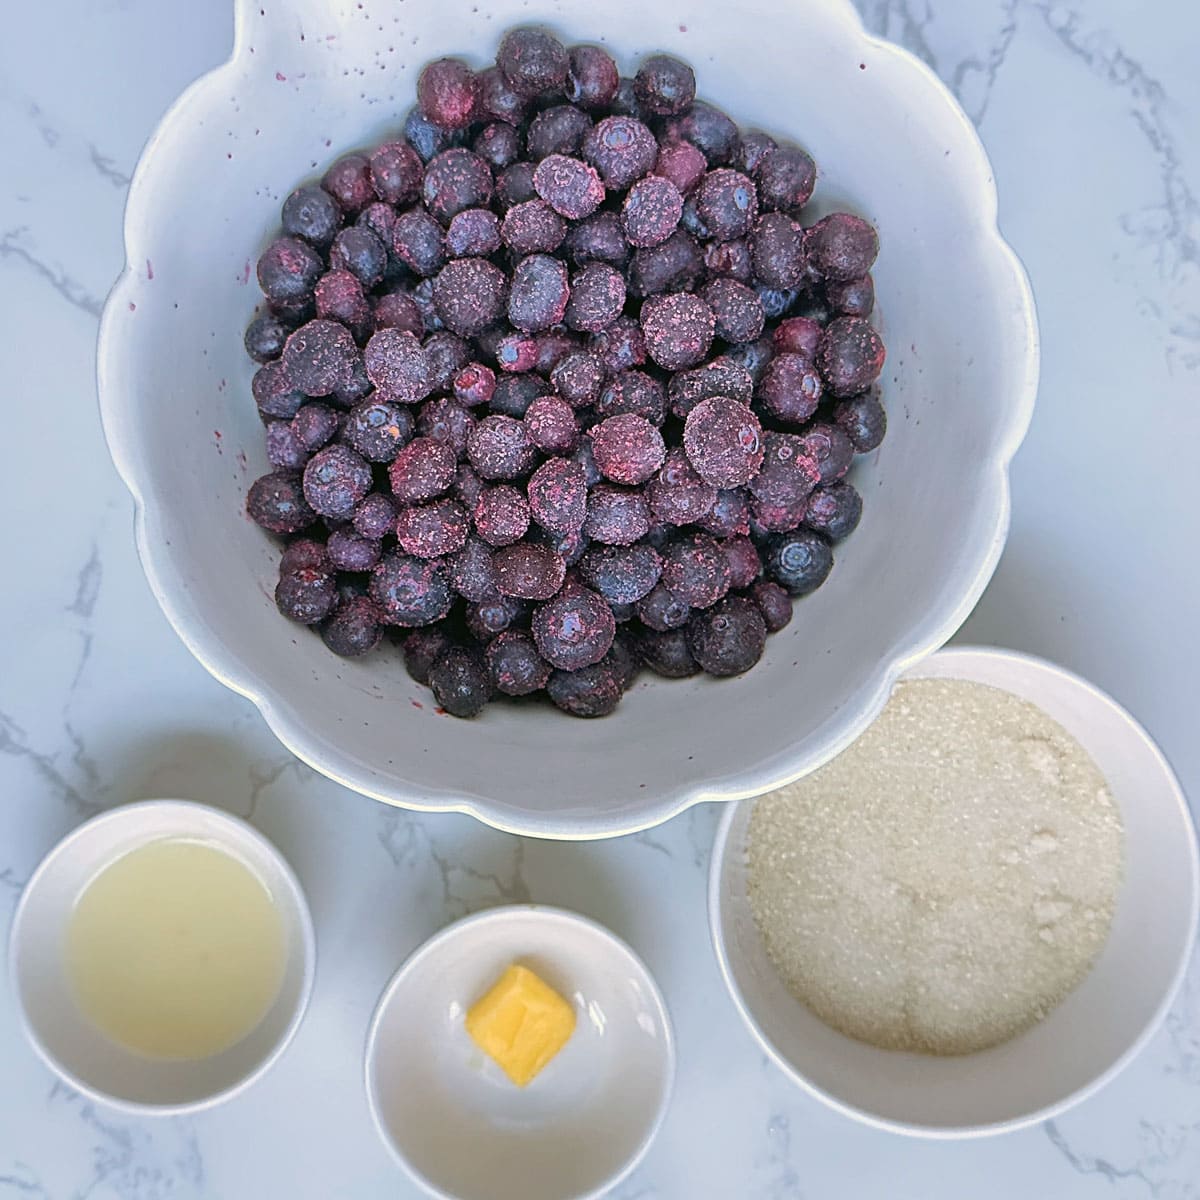 Blueberry jam ingredients.